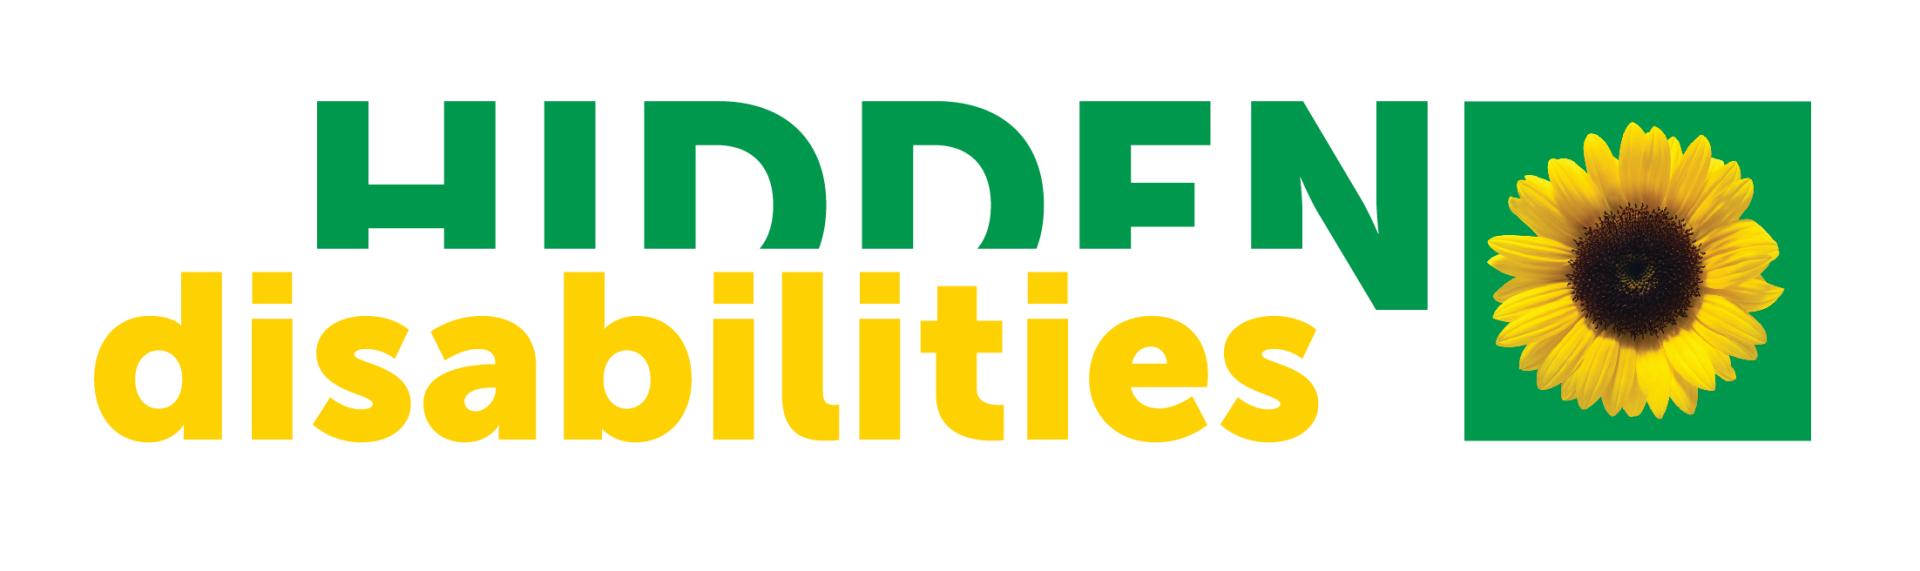 Logo of Hidden disabilities